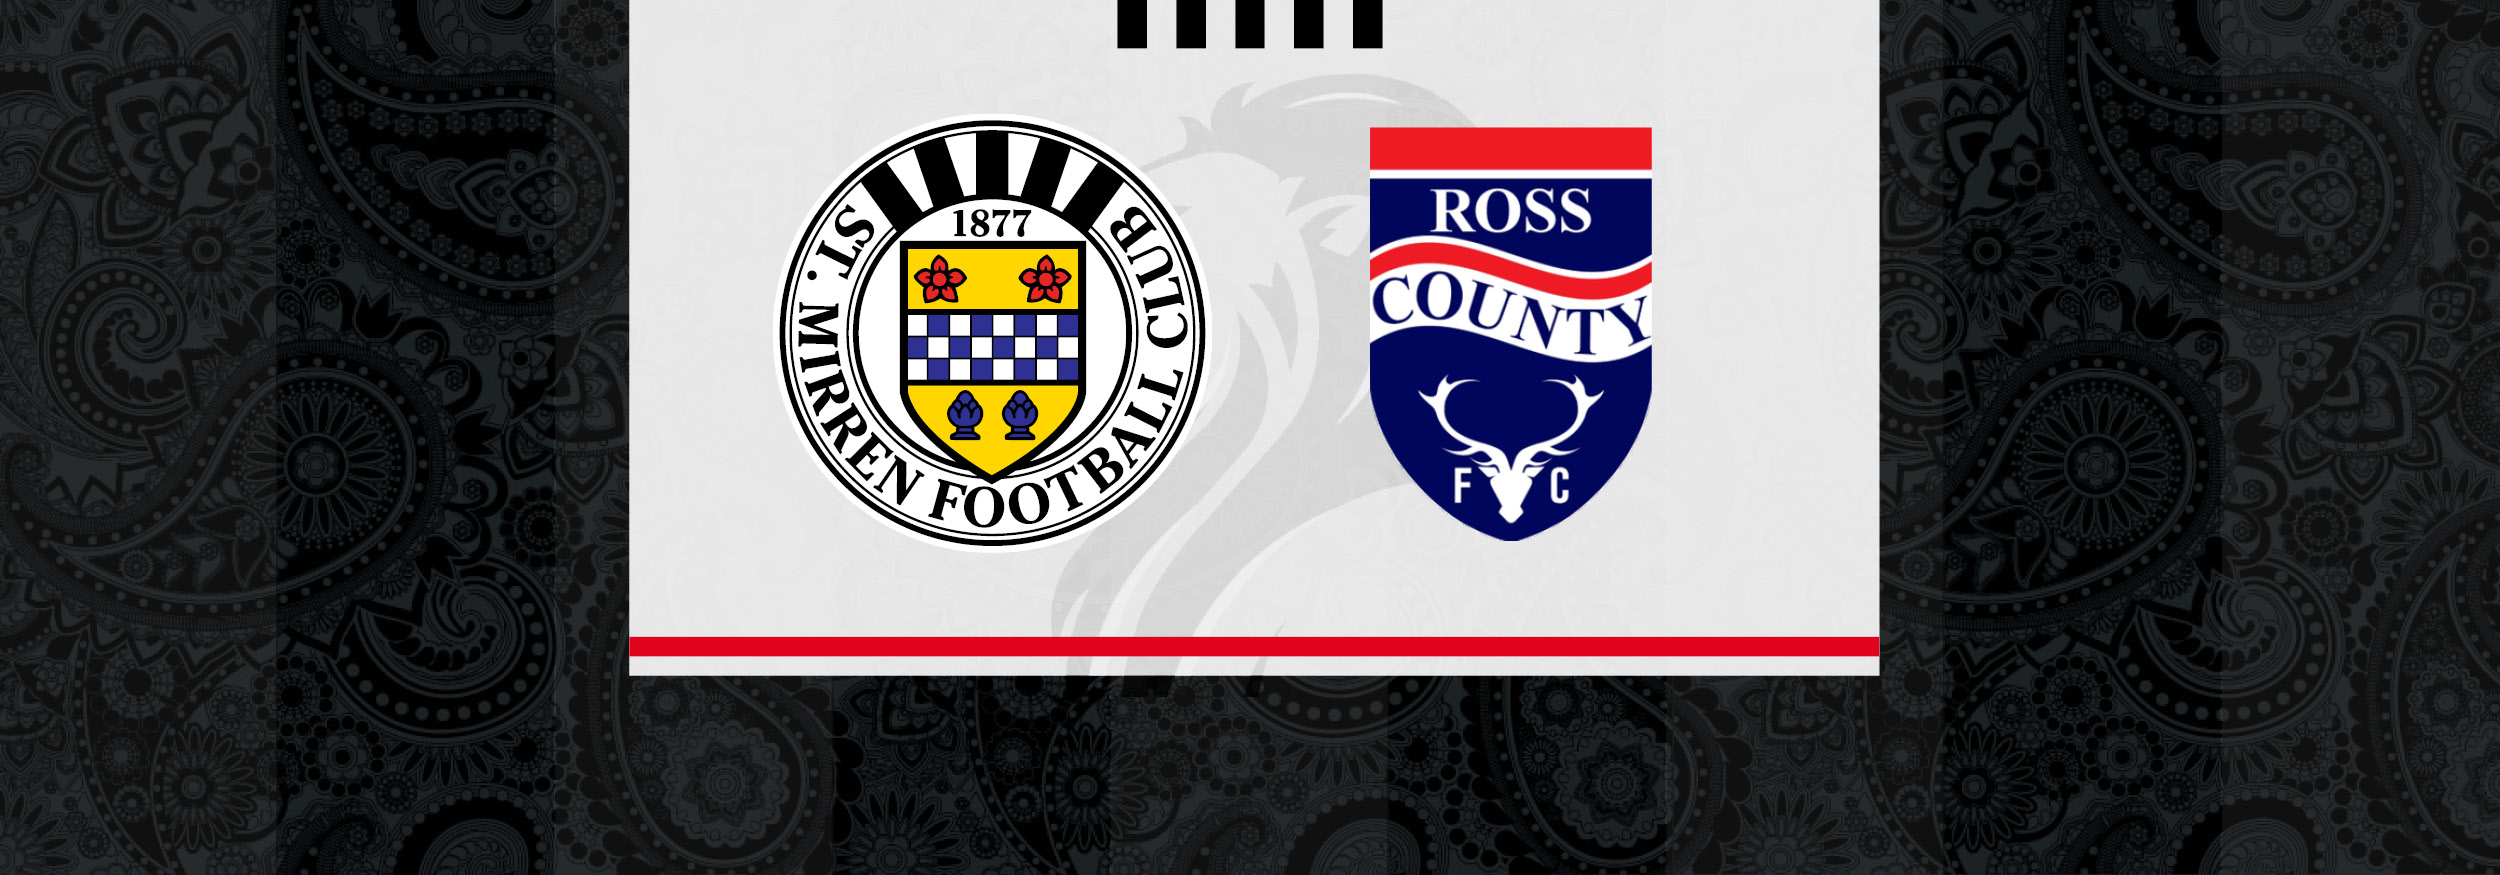 Matchday Info: St Mirren v Ross County (18th Feb)